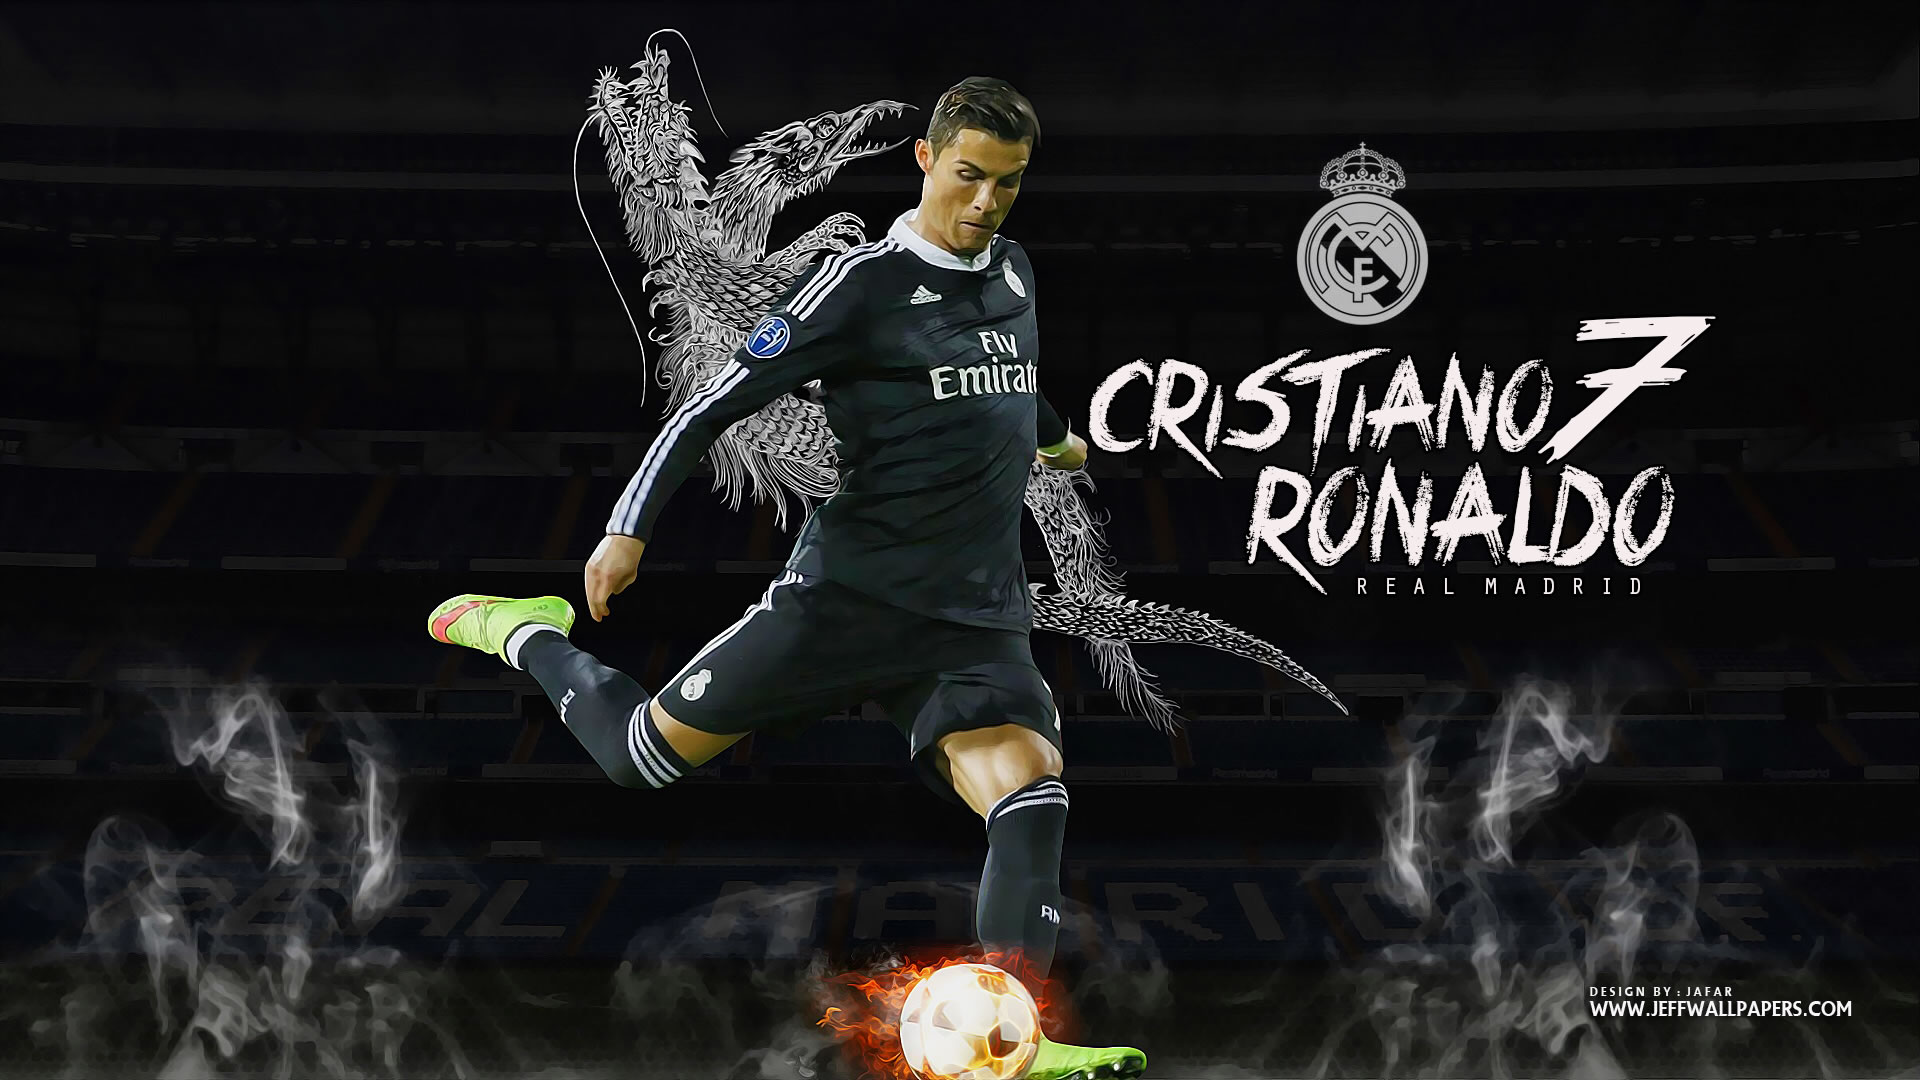 Cristiano Ronaldo Real Madrid Wallpaper WallpaperSafari